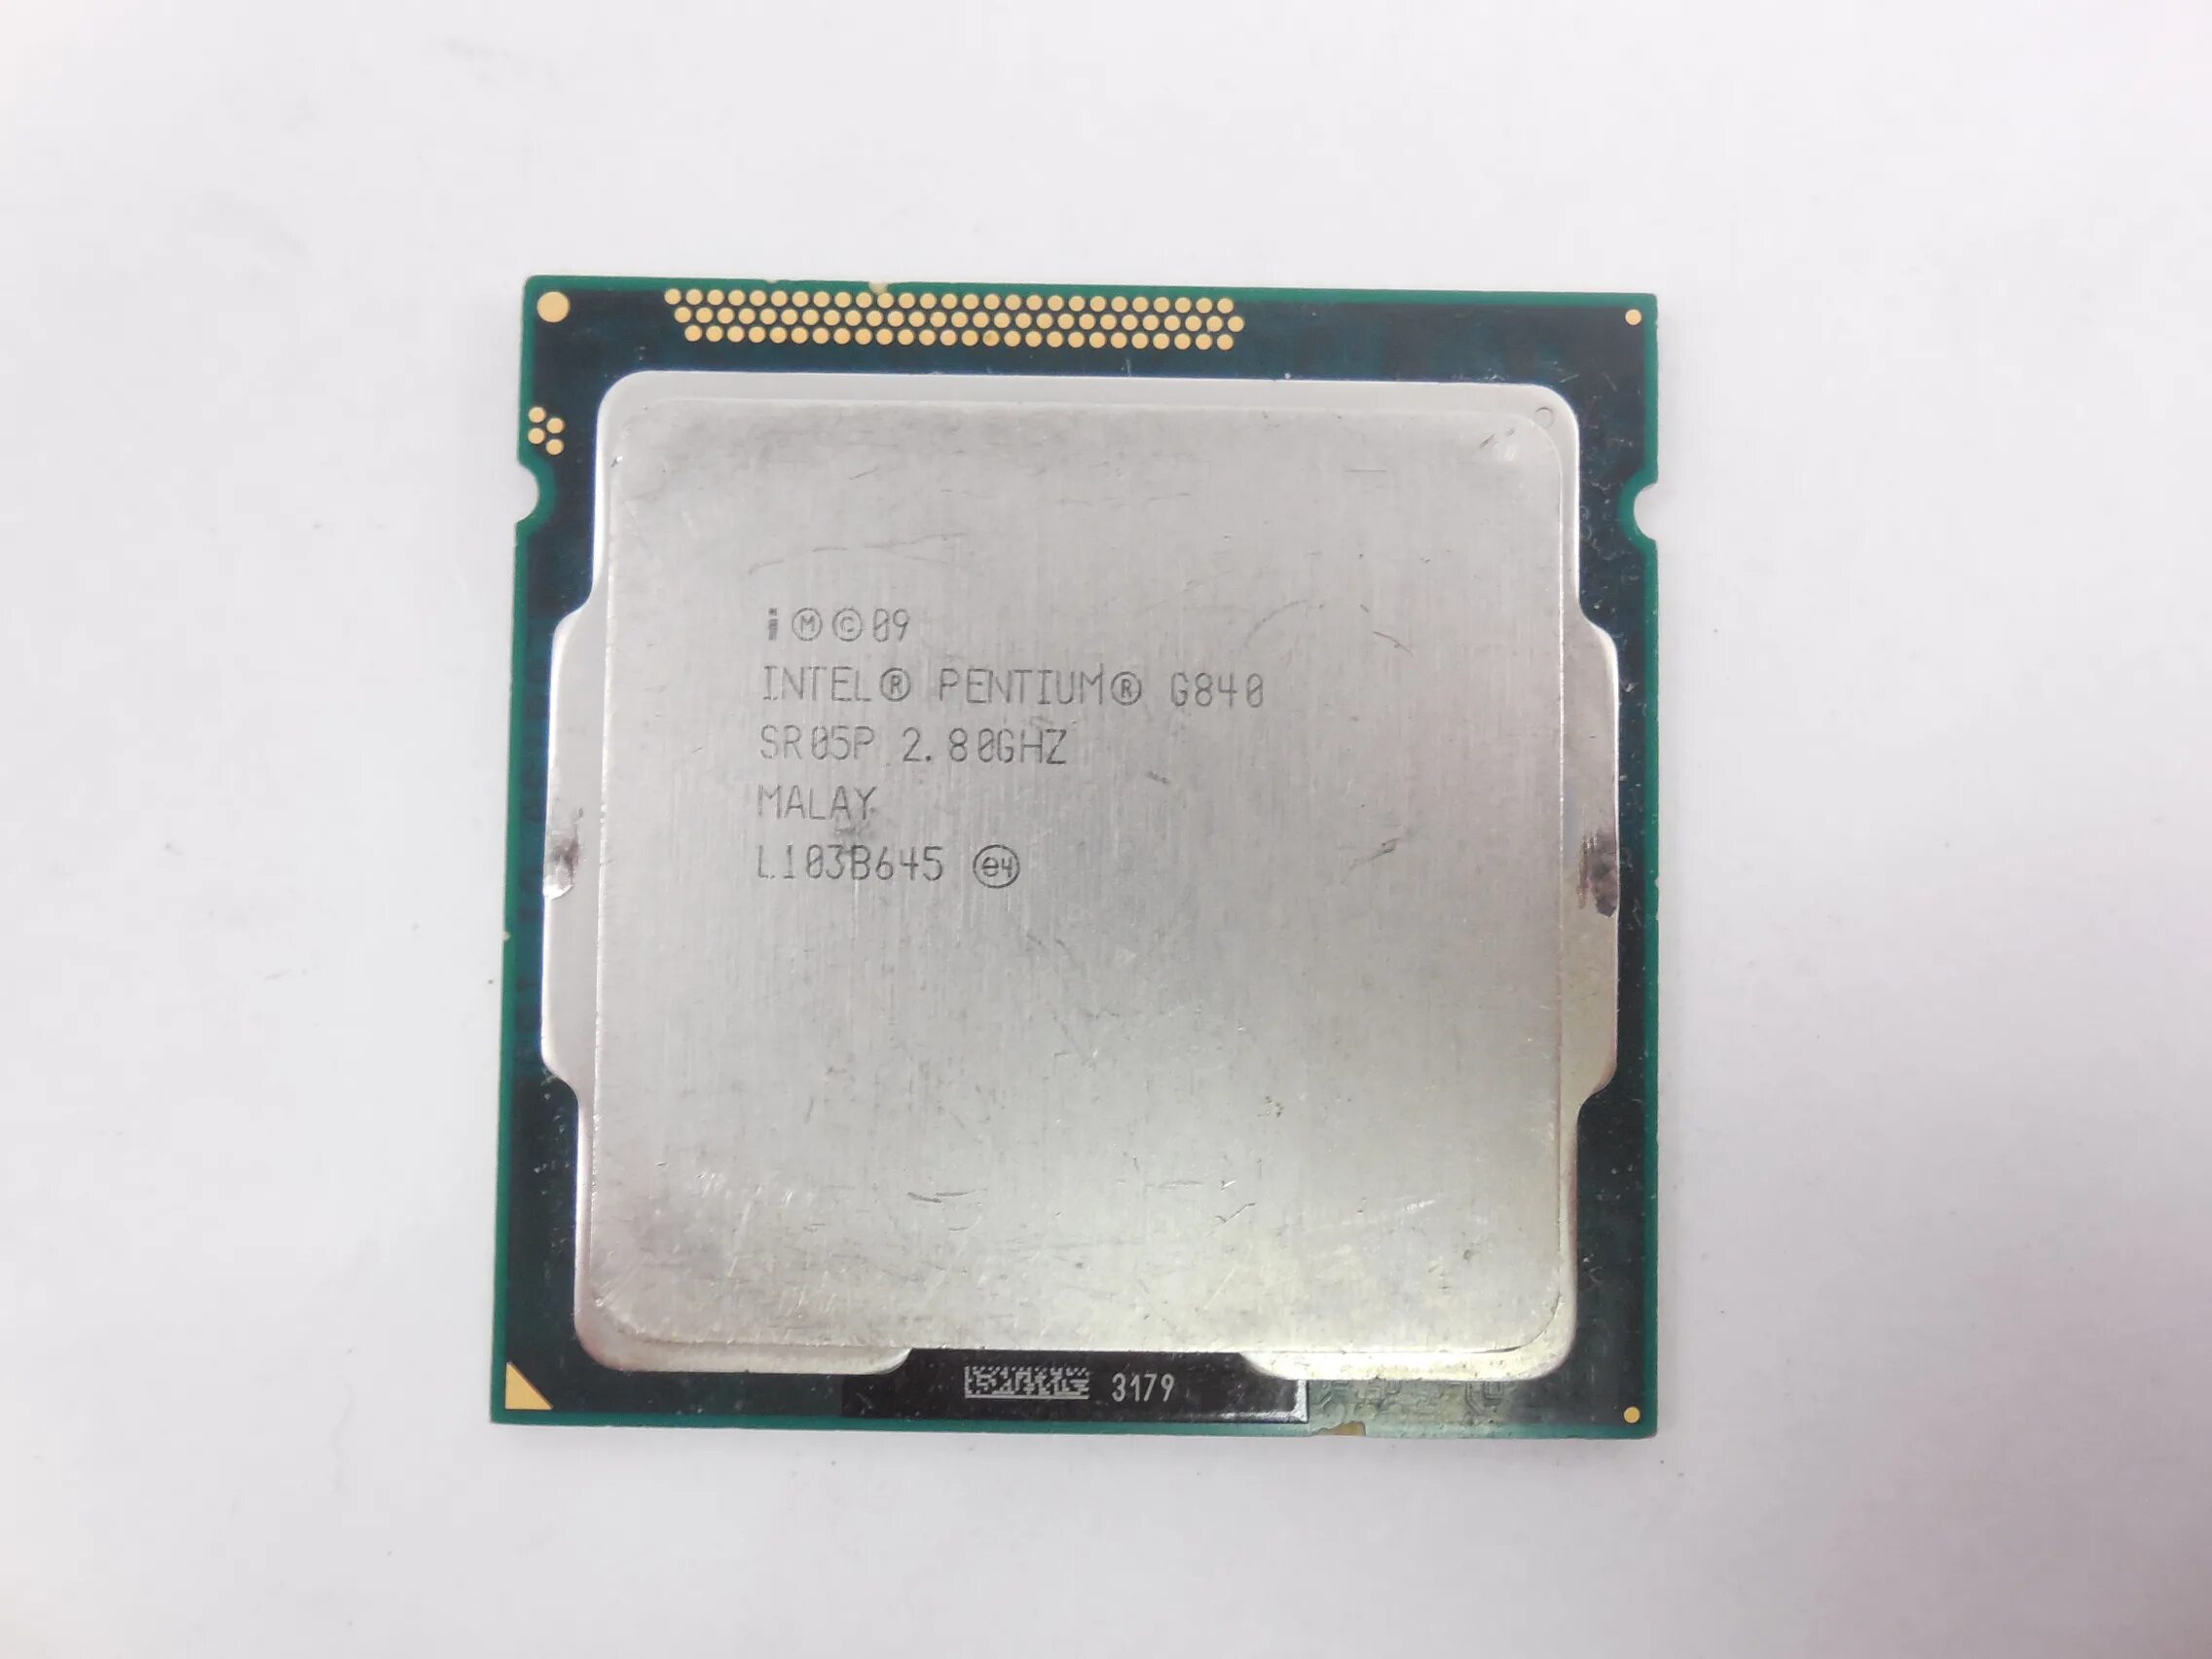 Core i5 1335u 1.3 ггц. Intel Core i5-2300 Sandy Bridge lga1155, 4 x 2800 МГЦ. Intel Core i5 2300 2.80GHZ. Процессор Intel Core i5 2300 CPU 2.80GHZ. Intel Core i5 2300 чипсет.